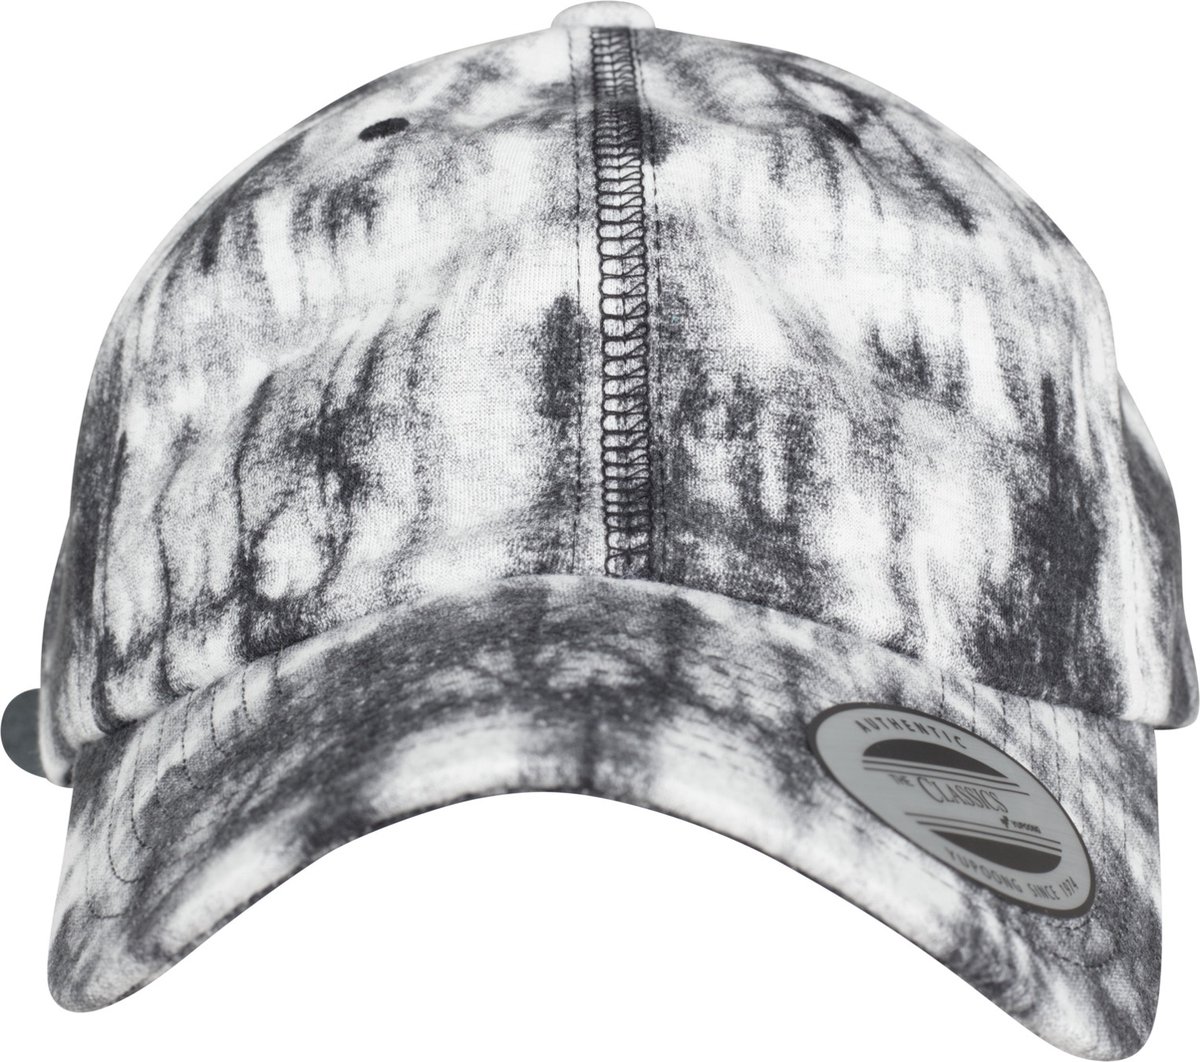 Urban Classics Flexfit cap Low profile Tie dye black off white one size